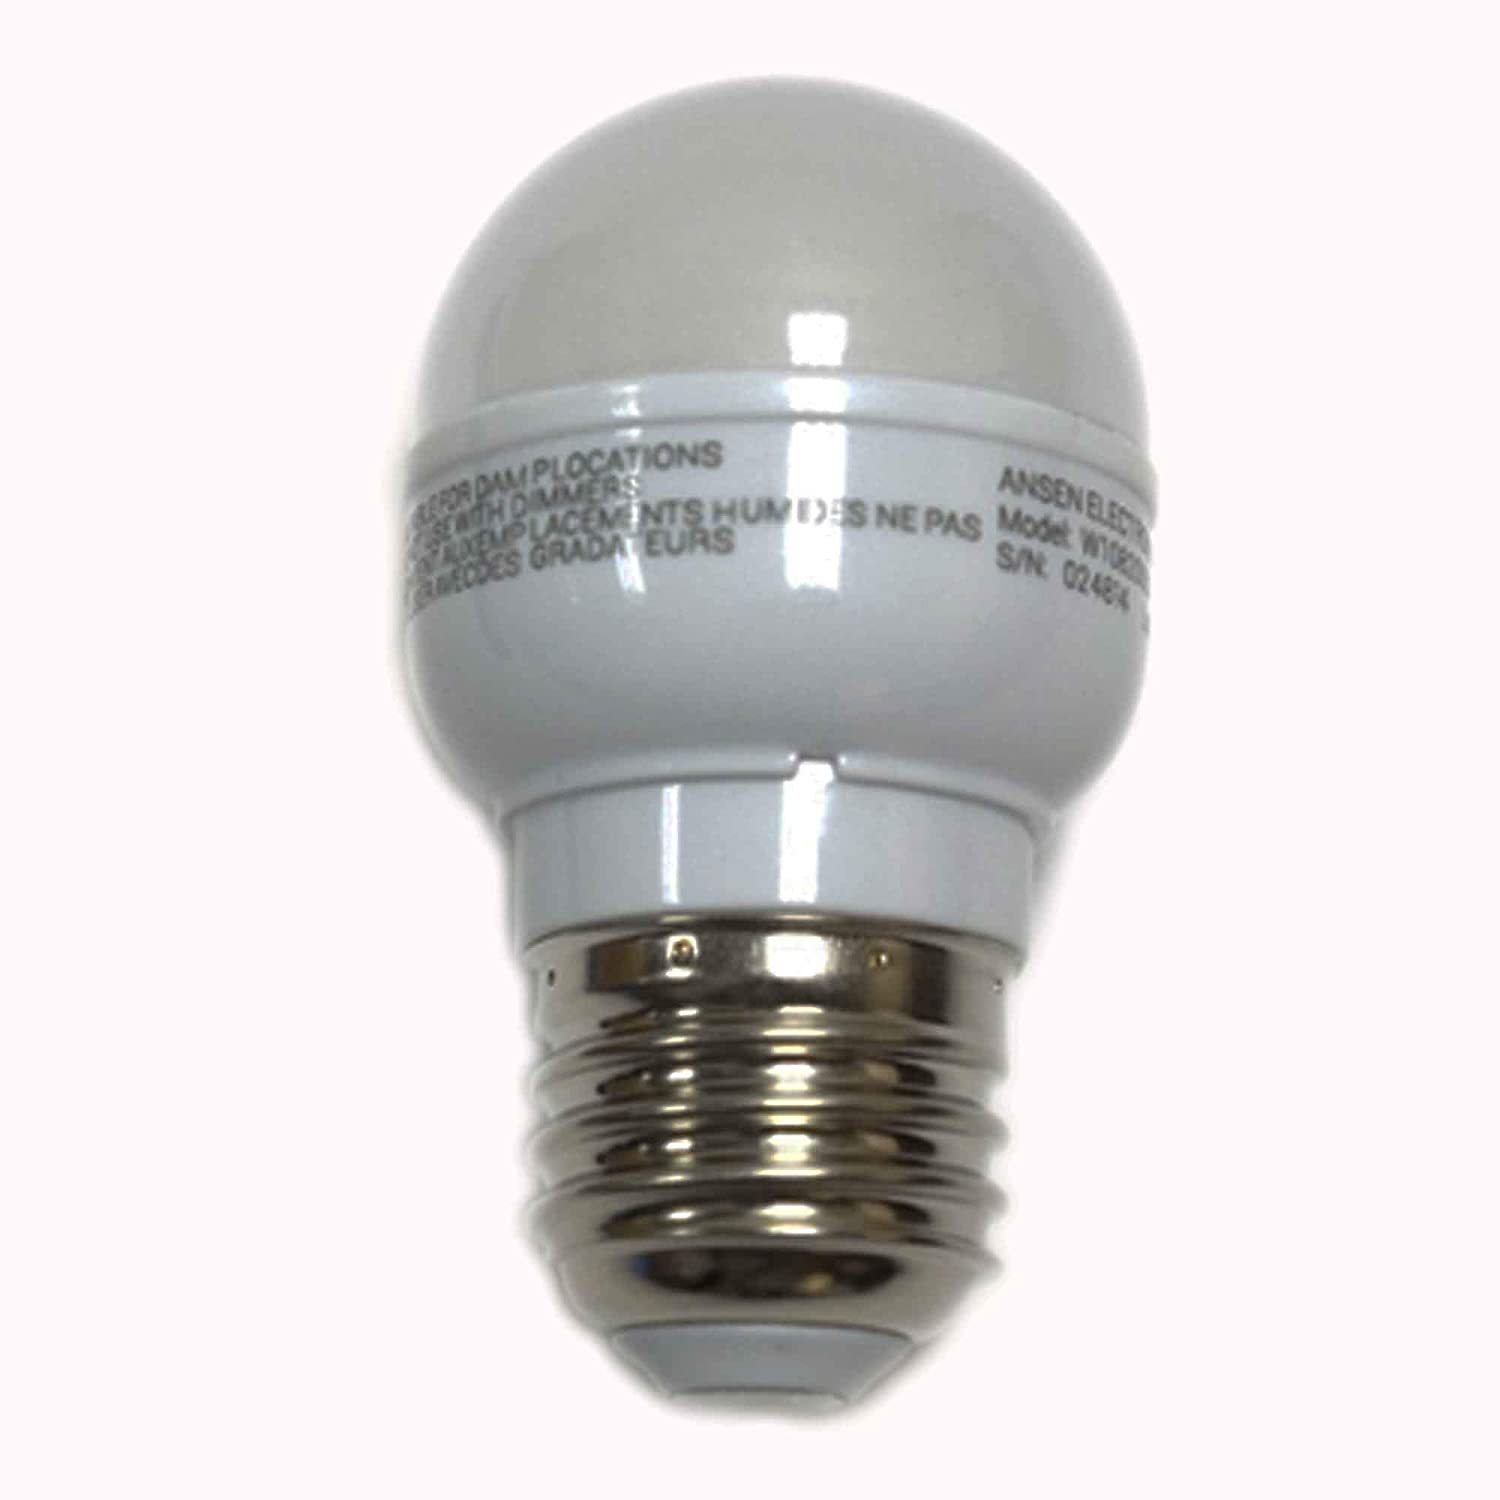 Whirlpool 4396822 25 Watt Light Bulb